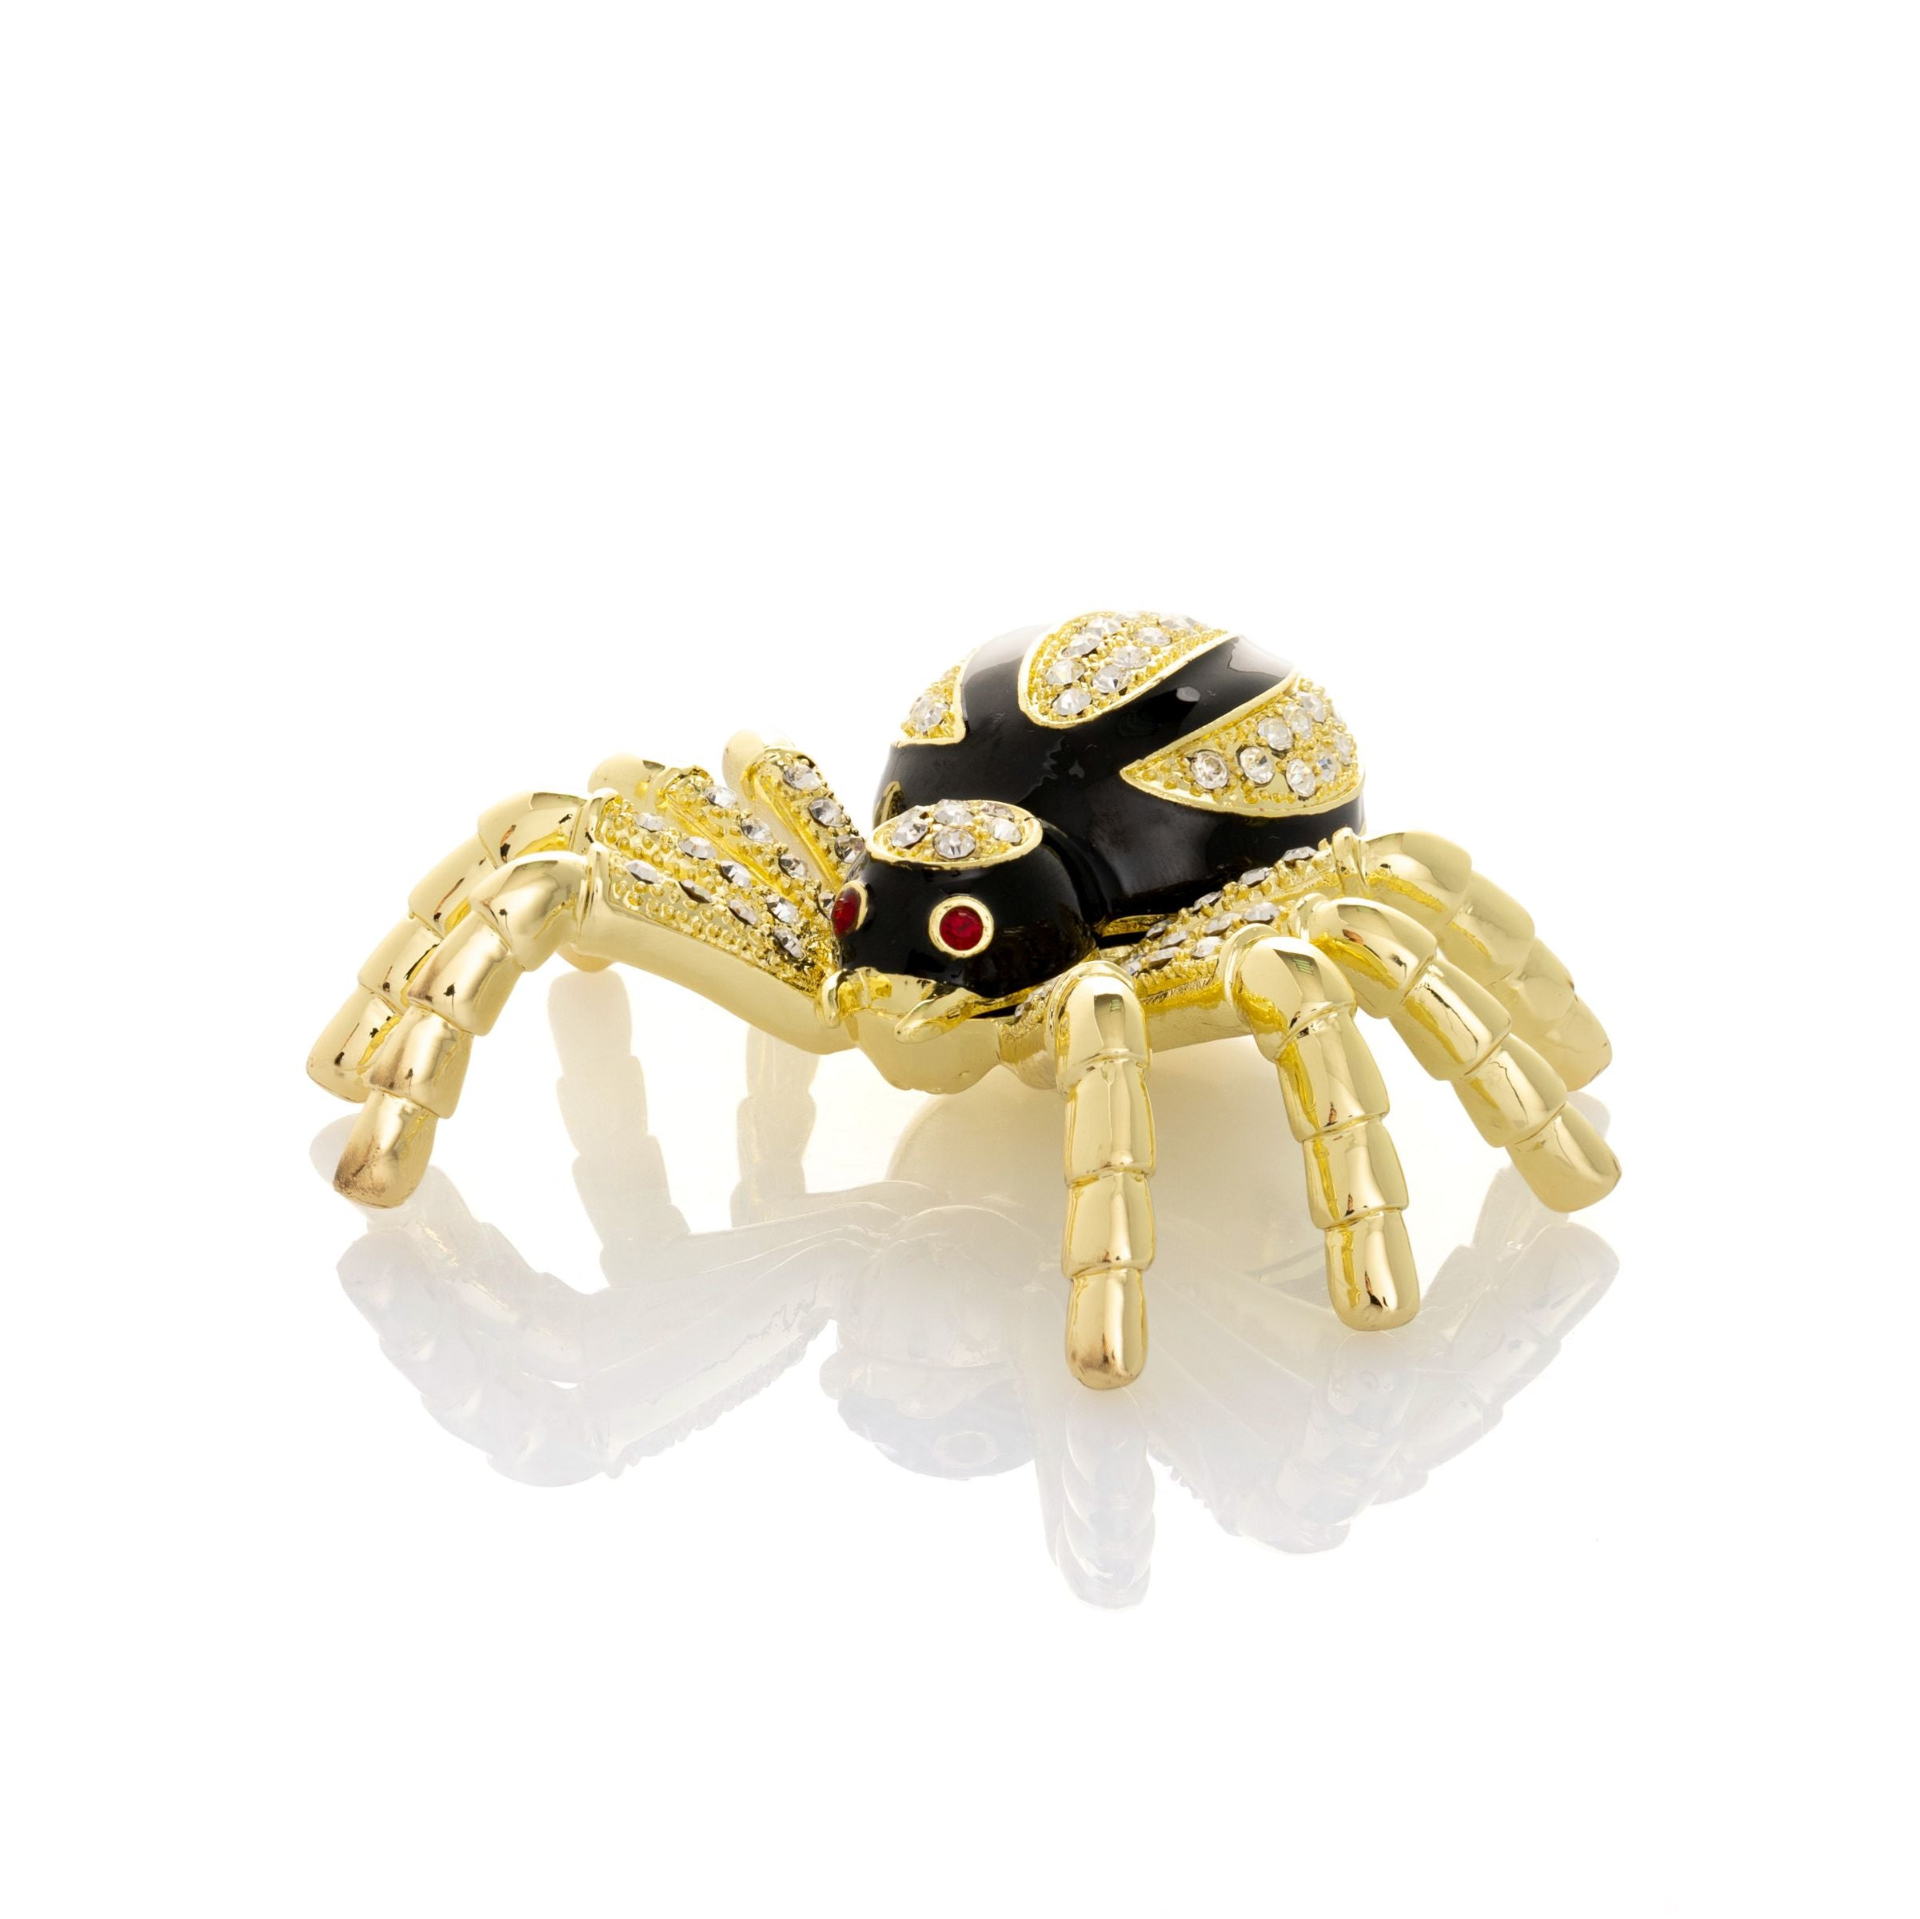 Gold & Black Tarantula Spider  